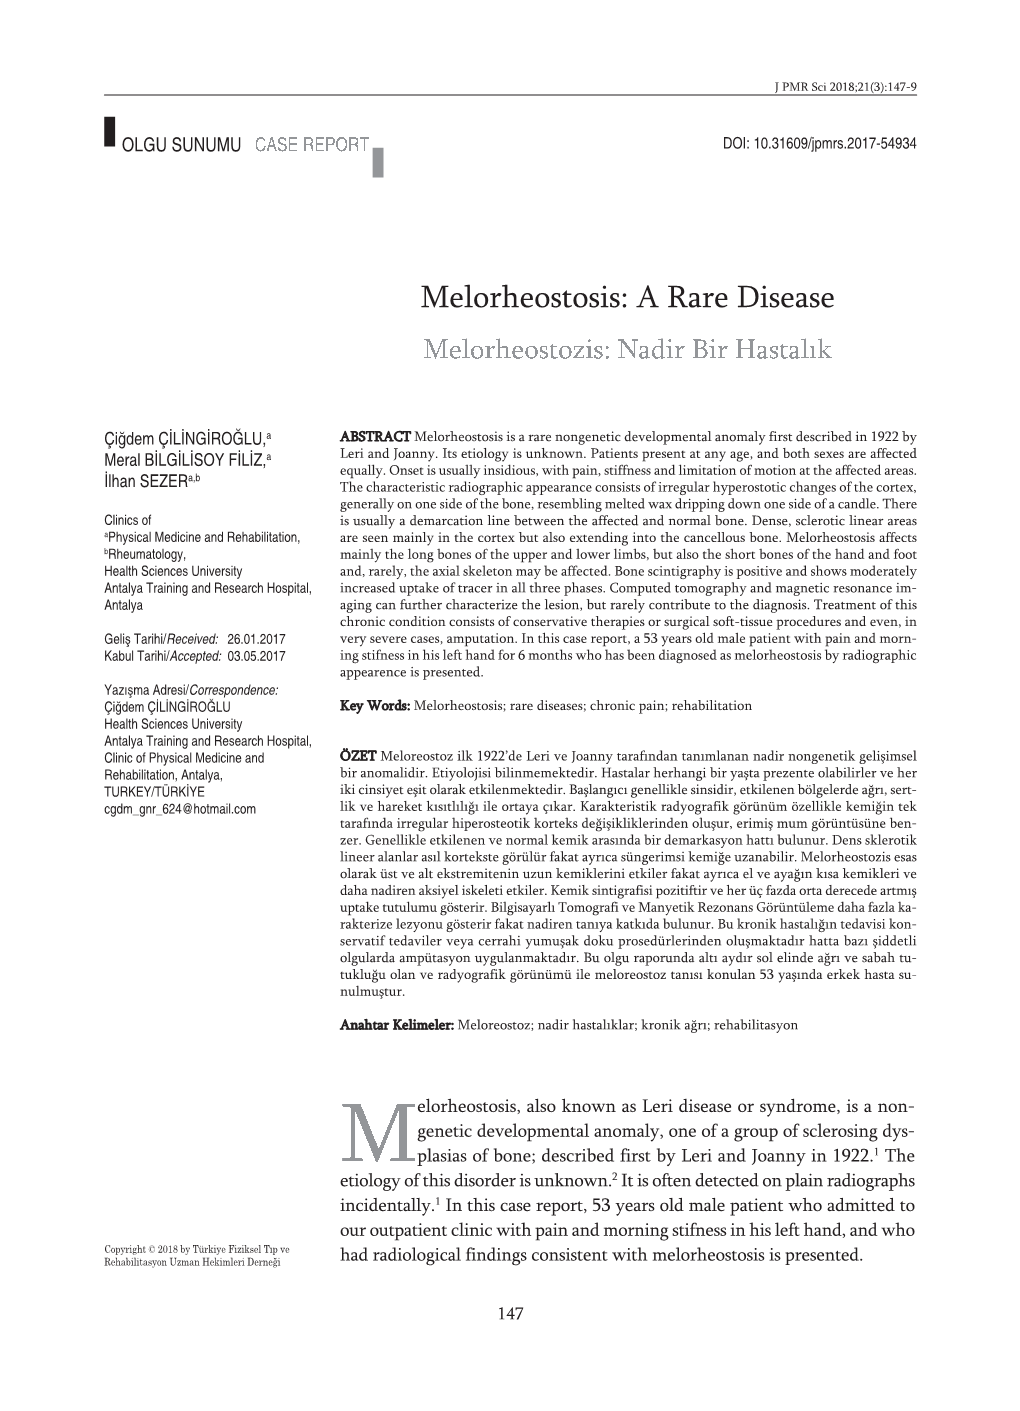 Melorheostosis: a Rare Disease